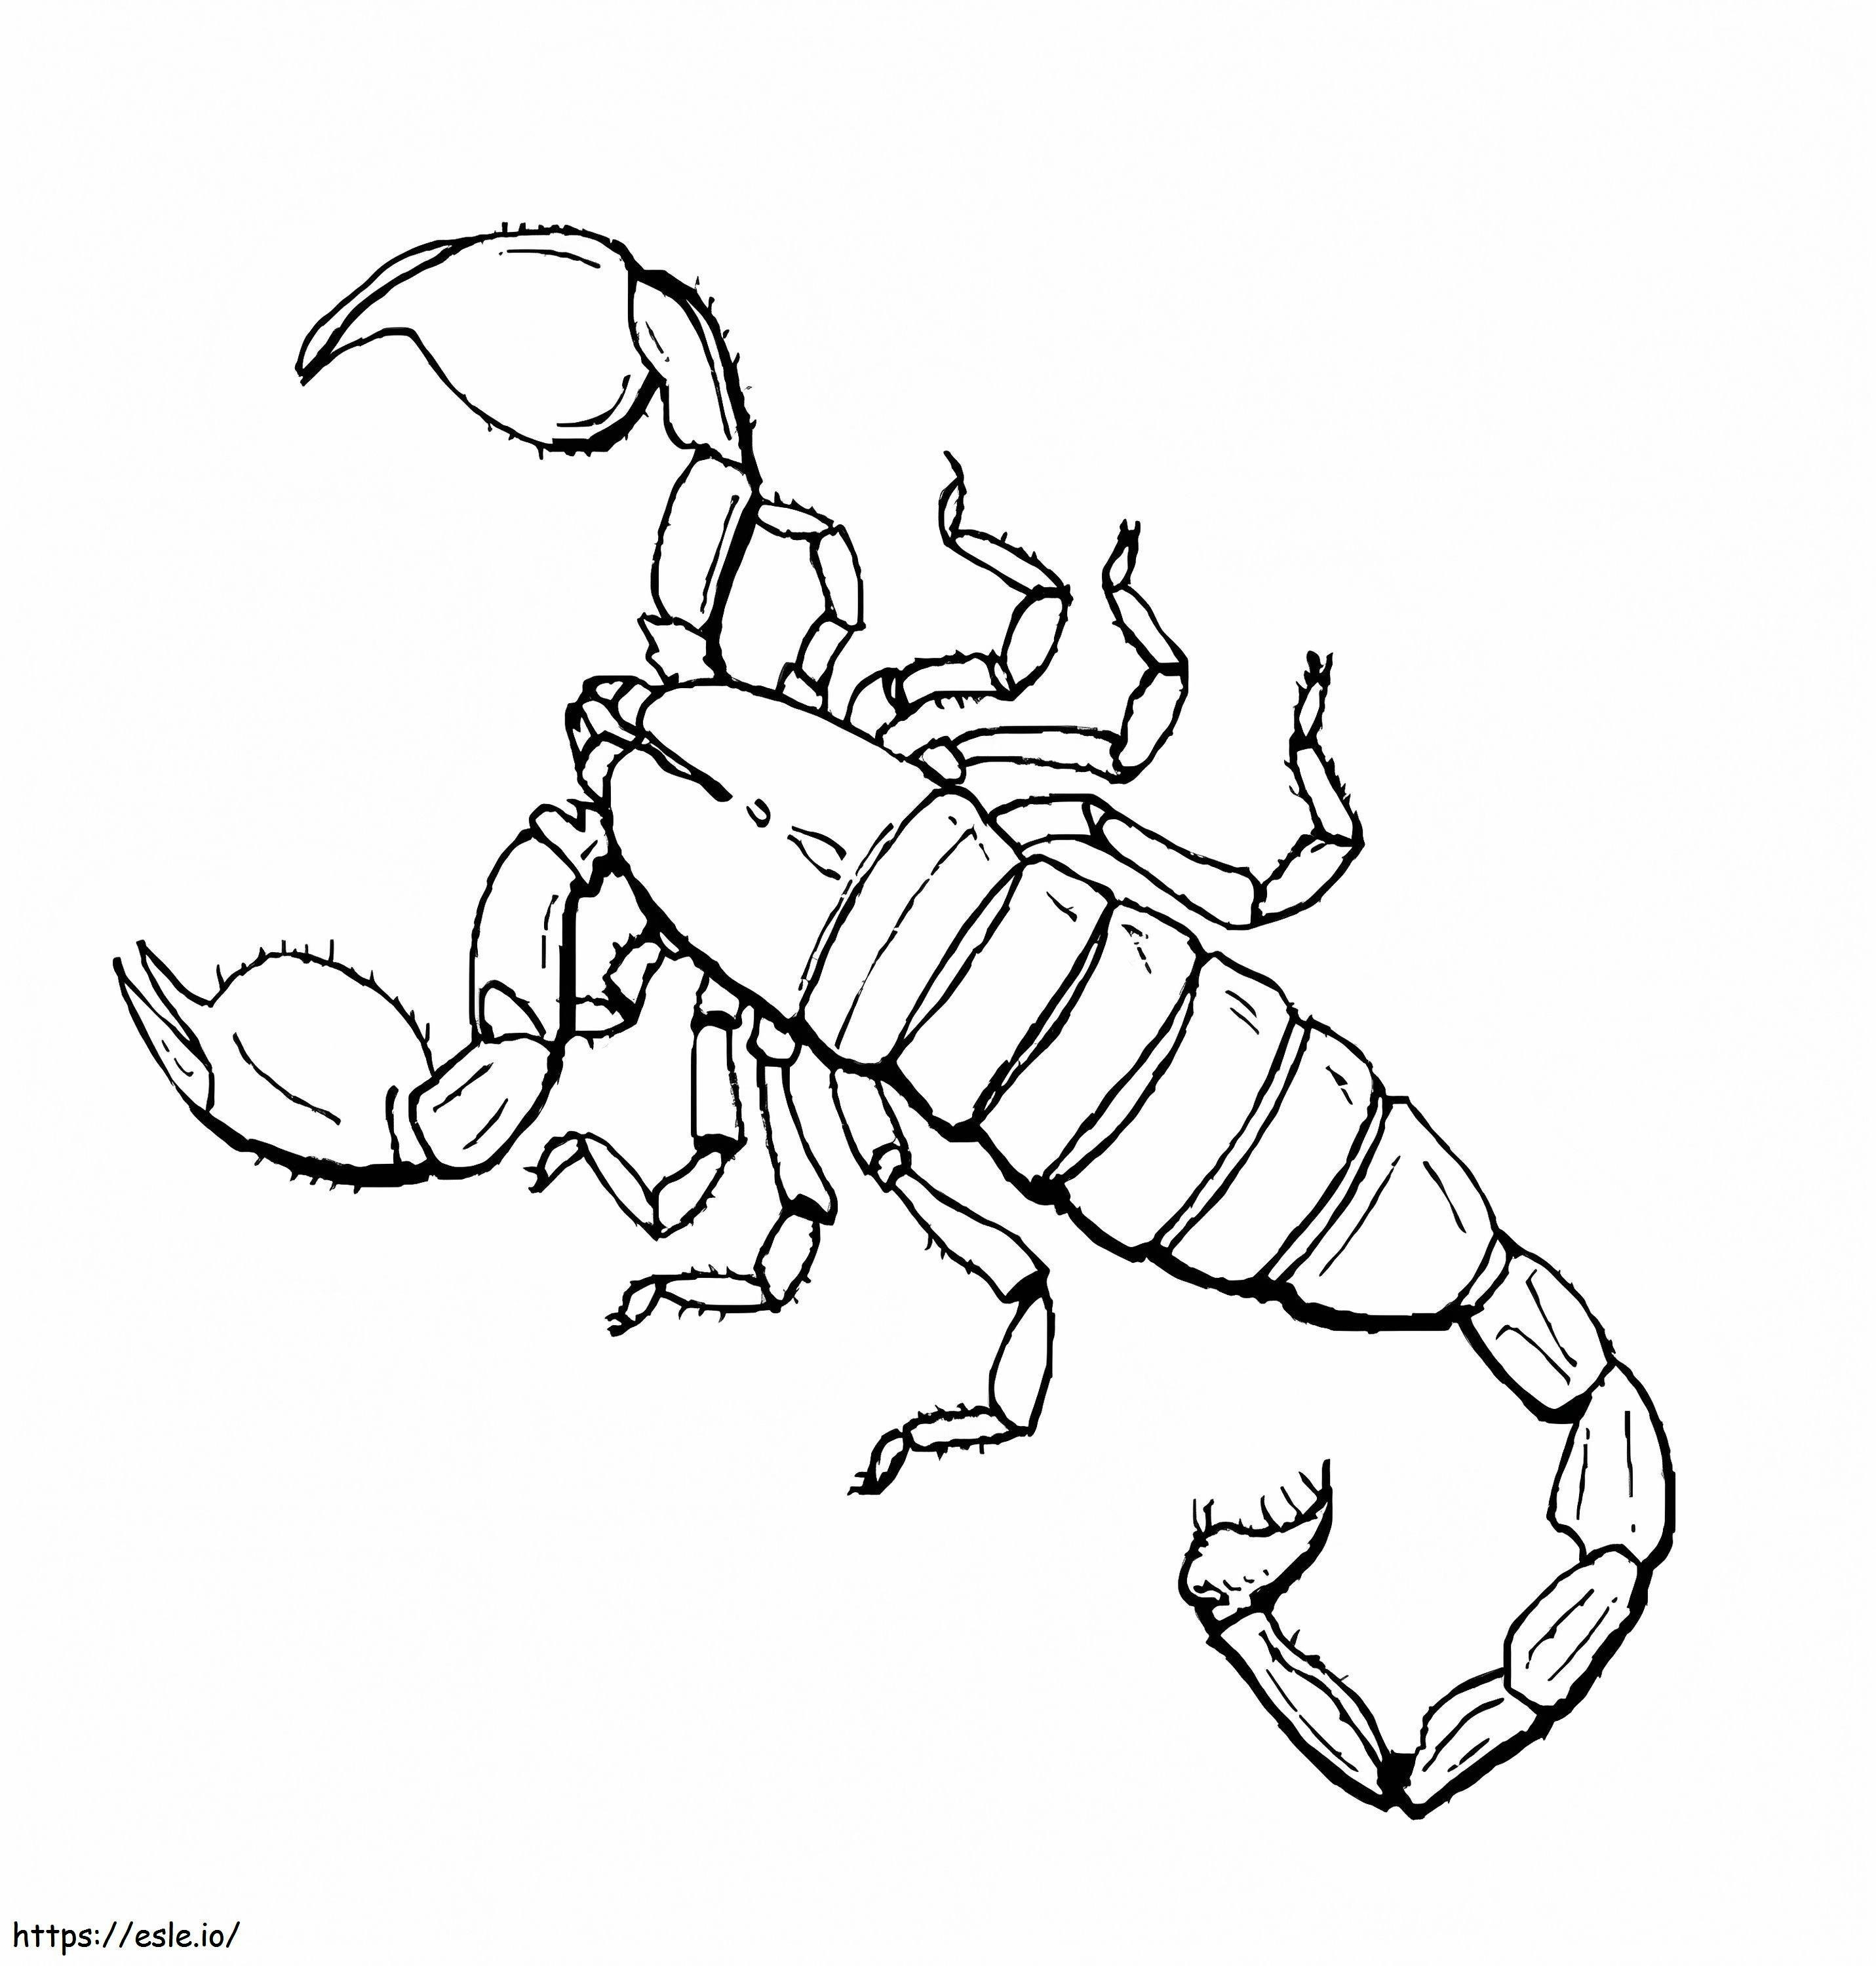 Skorpion 12 ausmalbilder